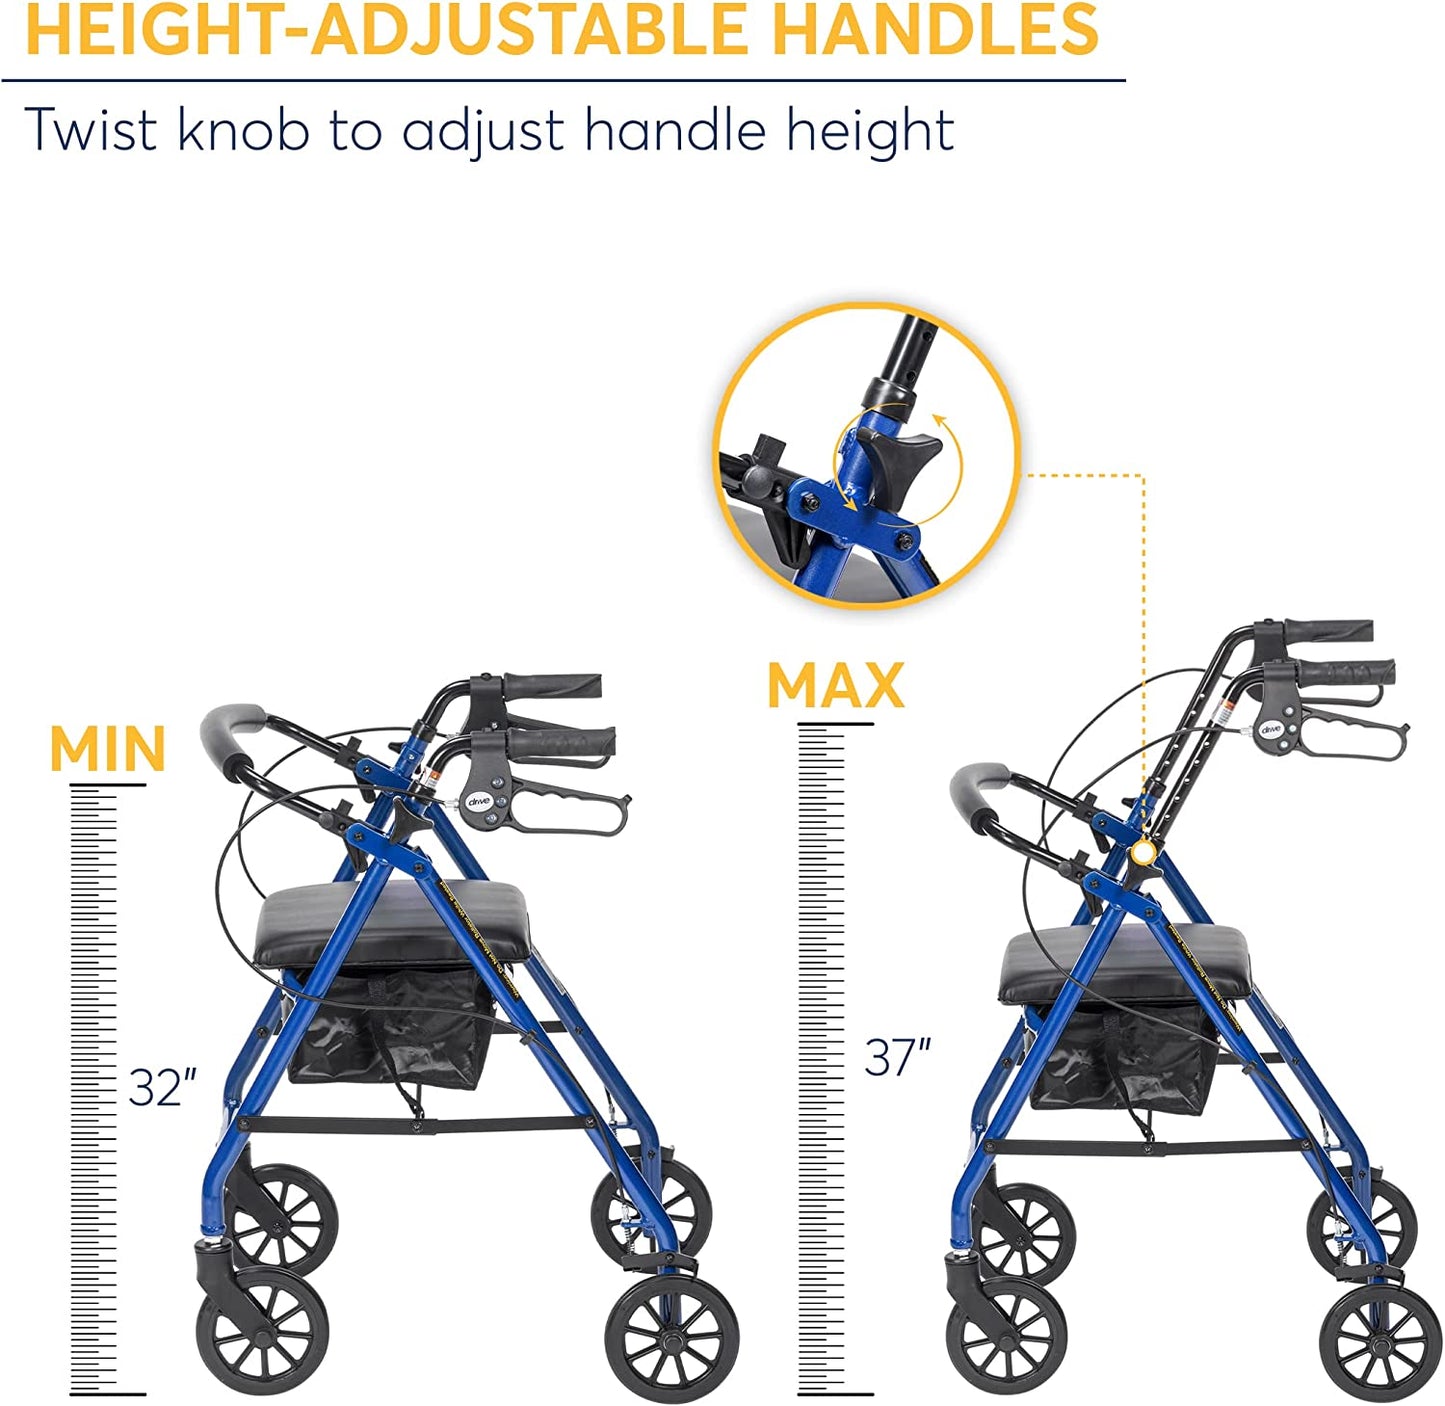 adjustable height handles on rollator